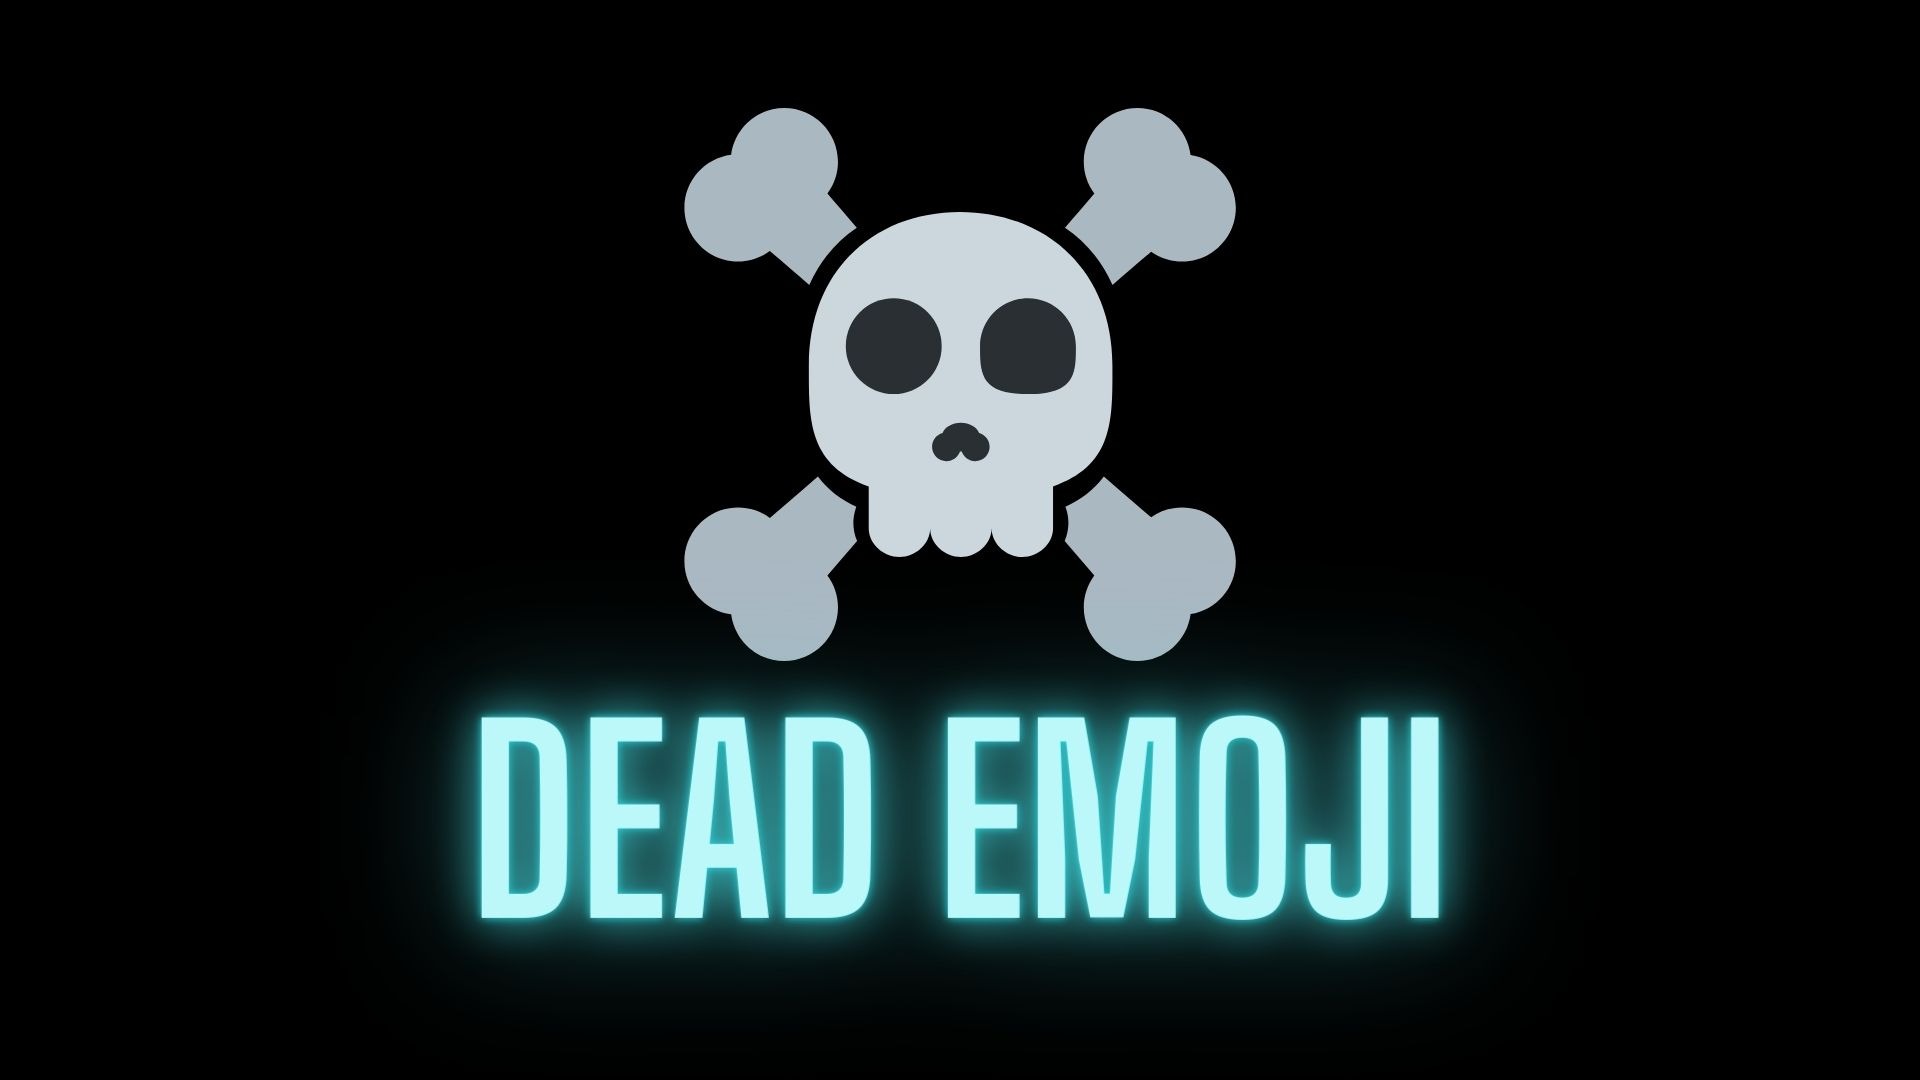 Dead emoji